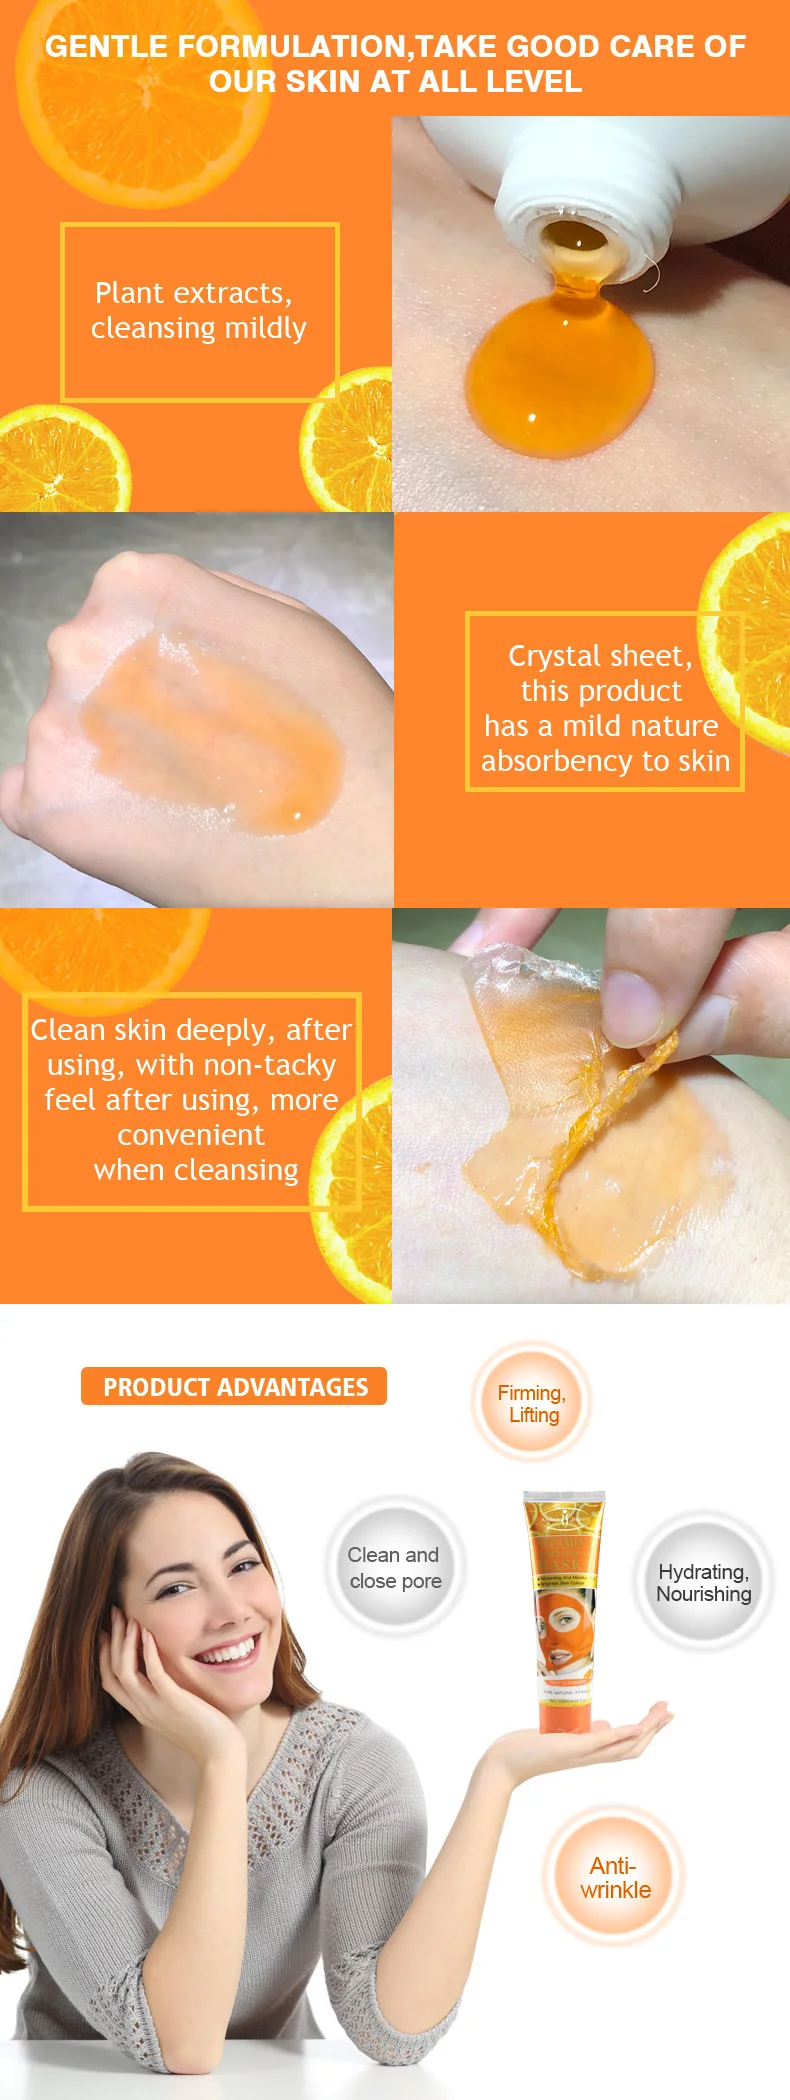 Aichun Beauty skin care vitamin c honey peel off facial mask whitening face mask